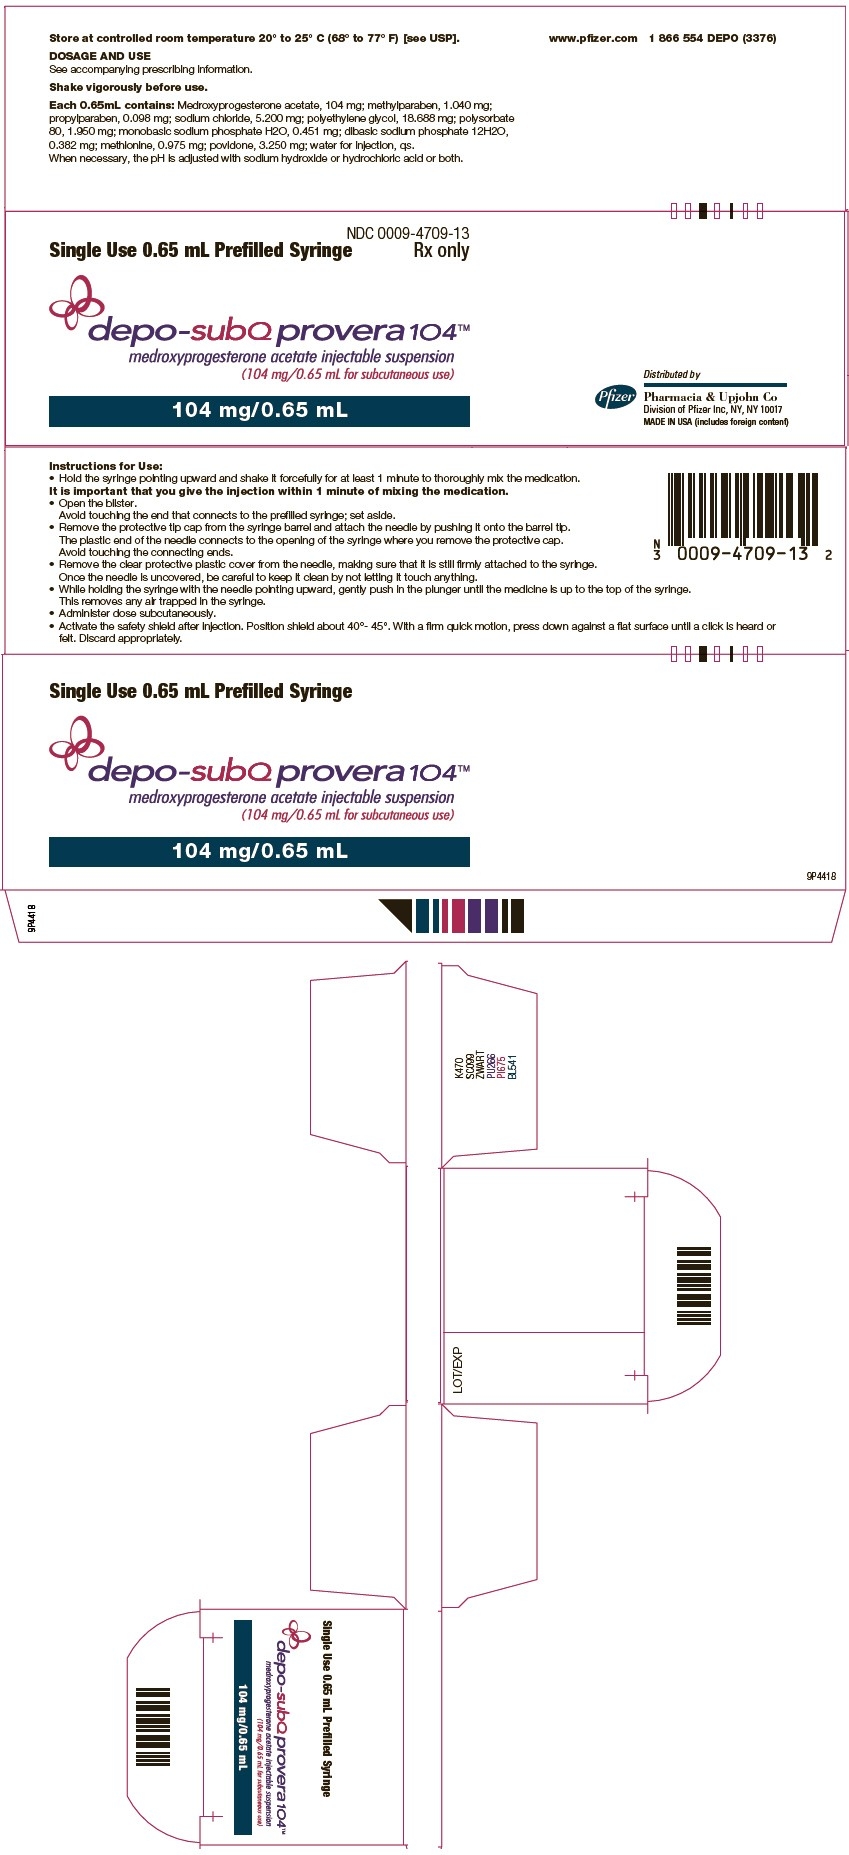 Ndc 0009-4709 Depo-Subq Provera Medroxyprogesterone Acetate  Medroxy Progesterone 2021 Calendar